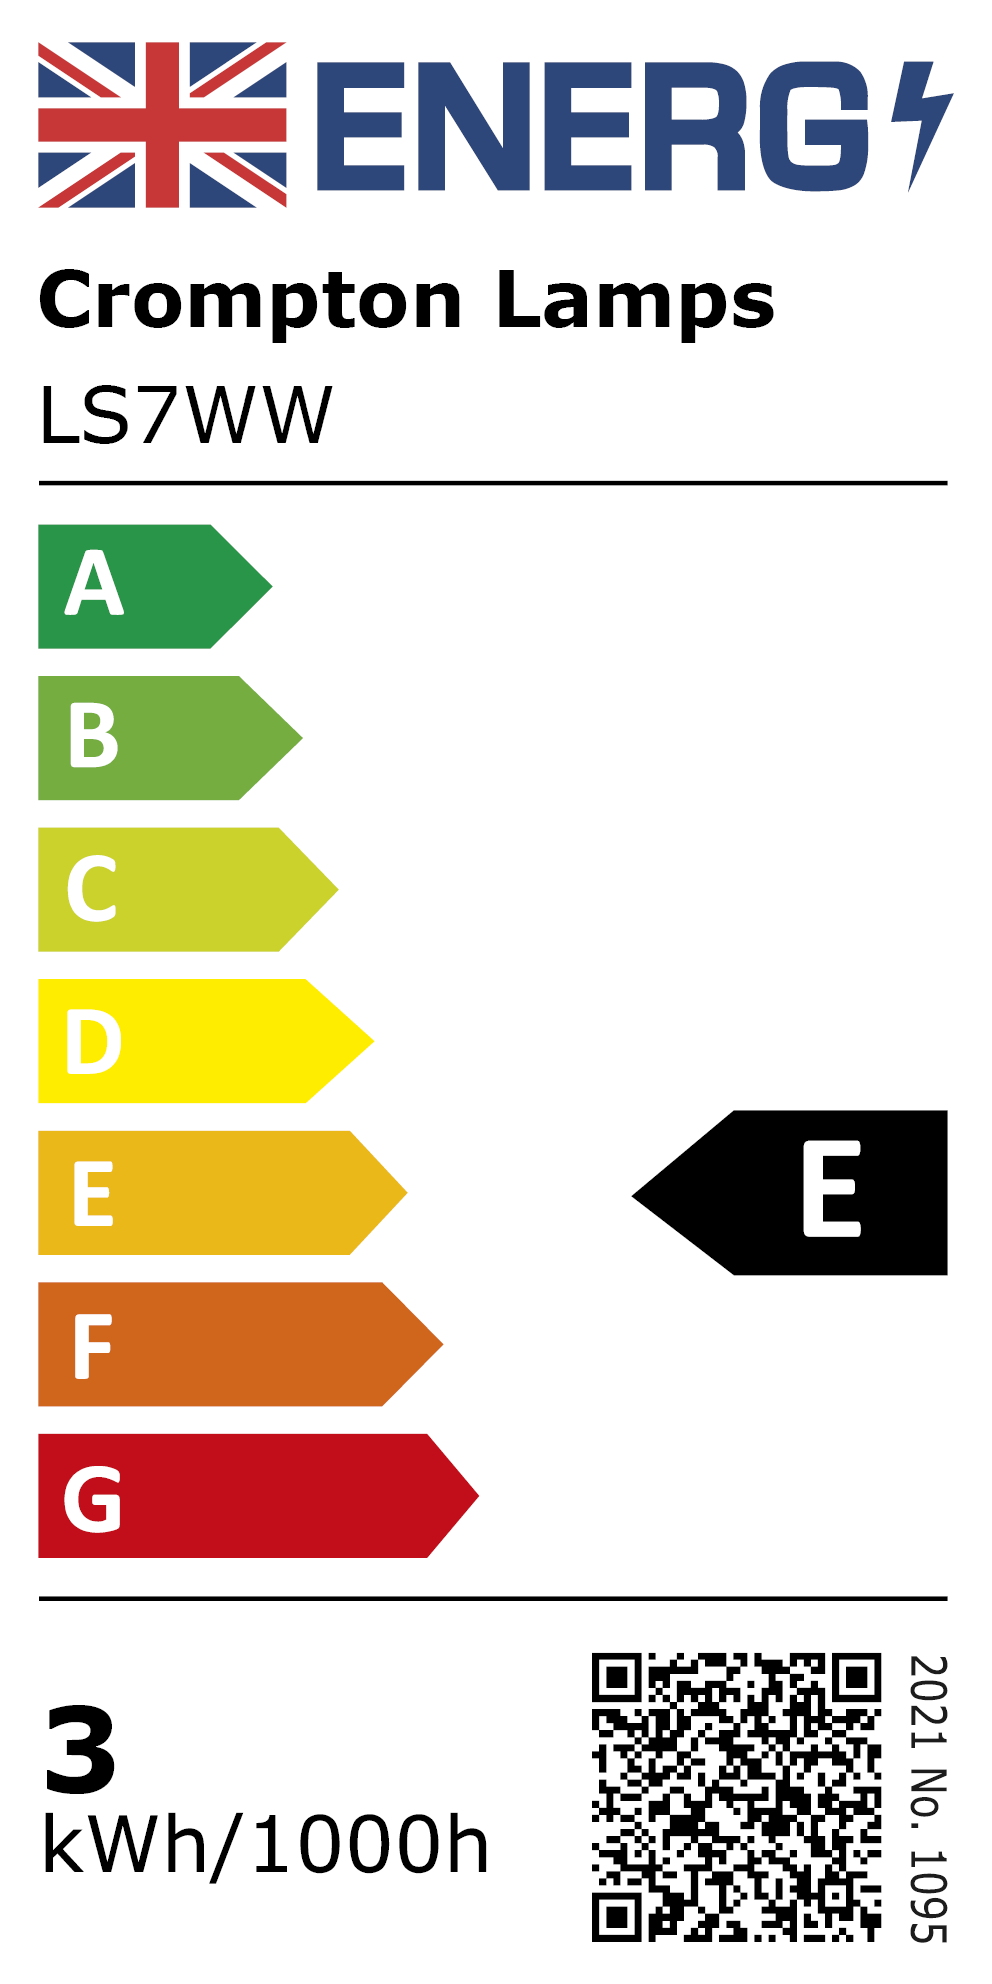 New 2021 Energy Rating Label: MPN LS7WW